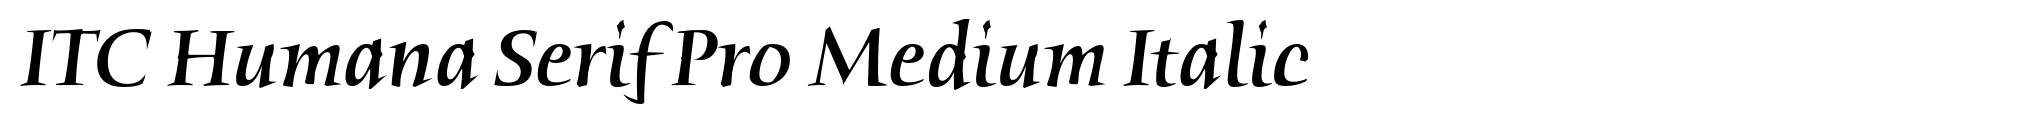 ITC Humana Serif Pro Medium Italic image